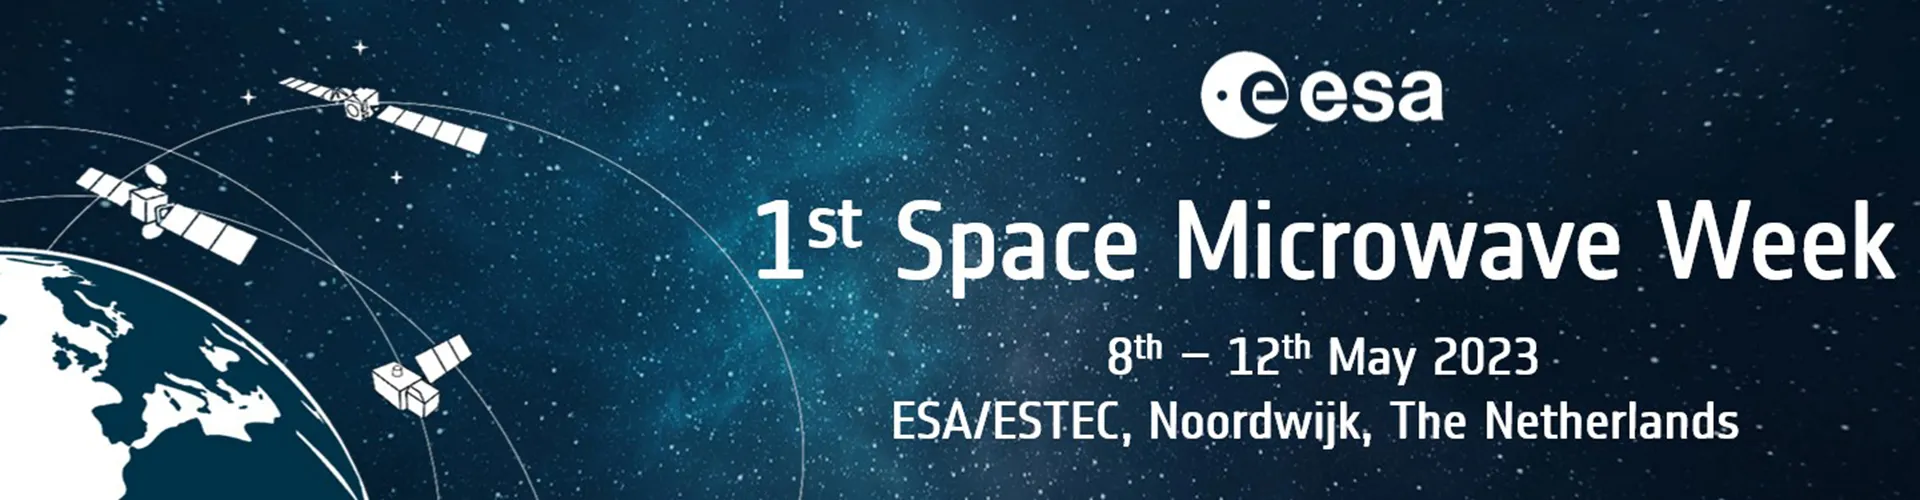 欧州宇宙機関 1st Space Microwave Week at the European Space Agency